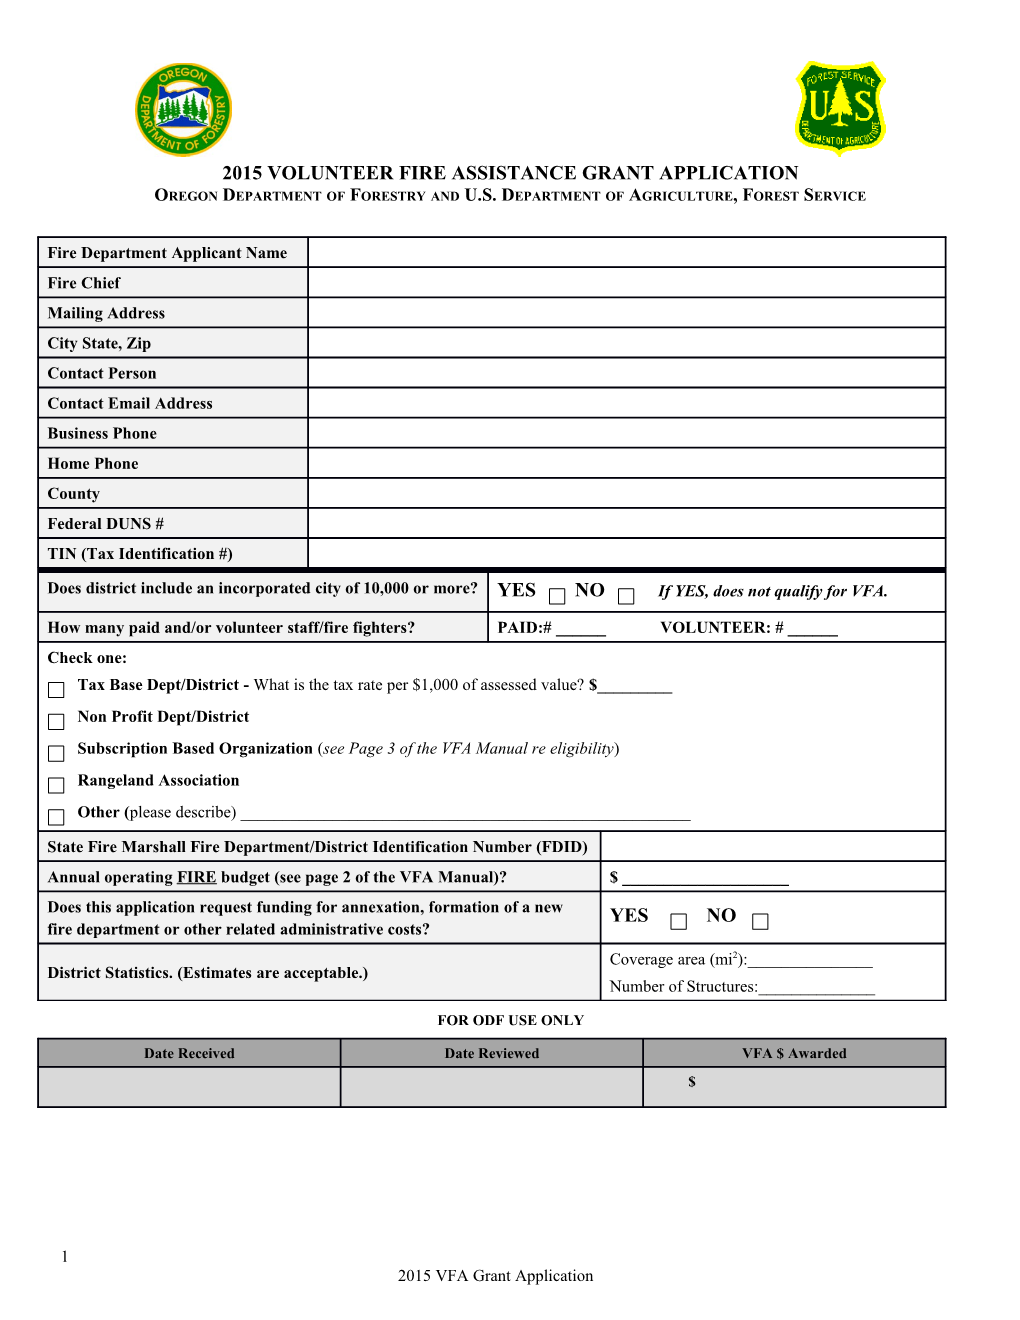 2015 VFA Application Form